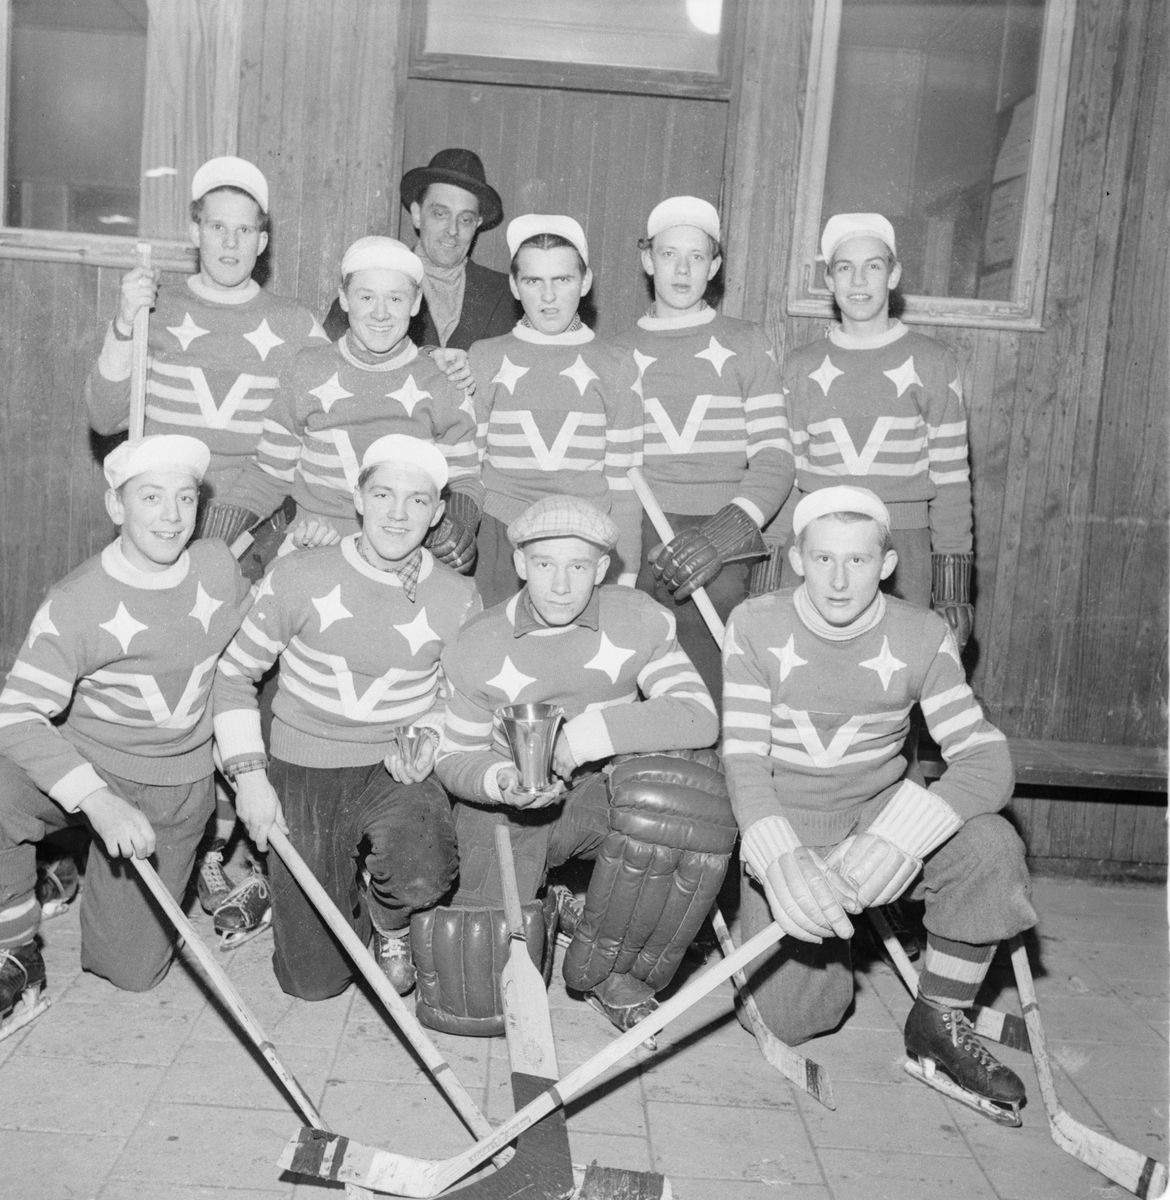 Ishockey - UNT-cup, Vesta, Uppsala juni 1948